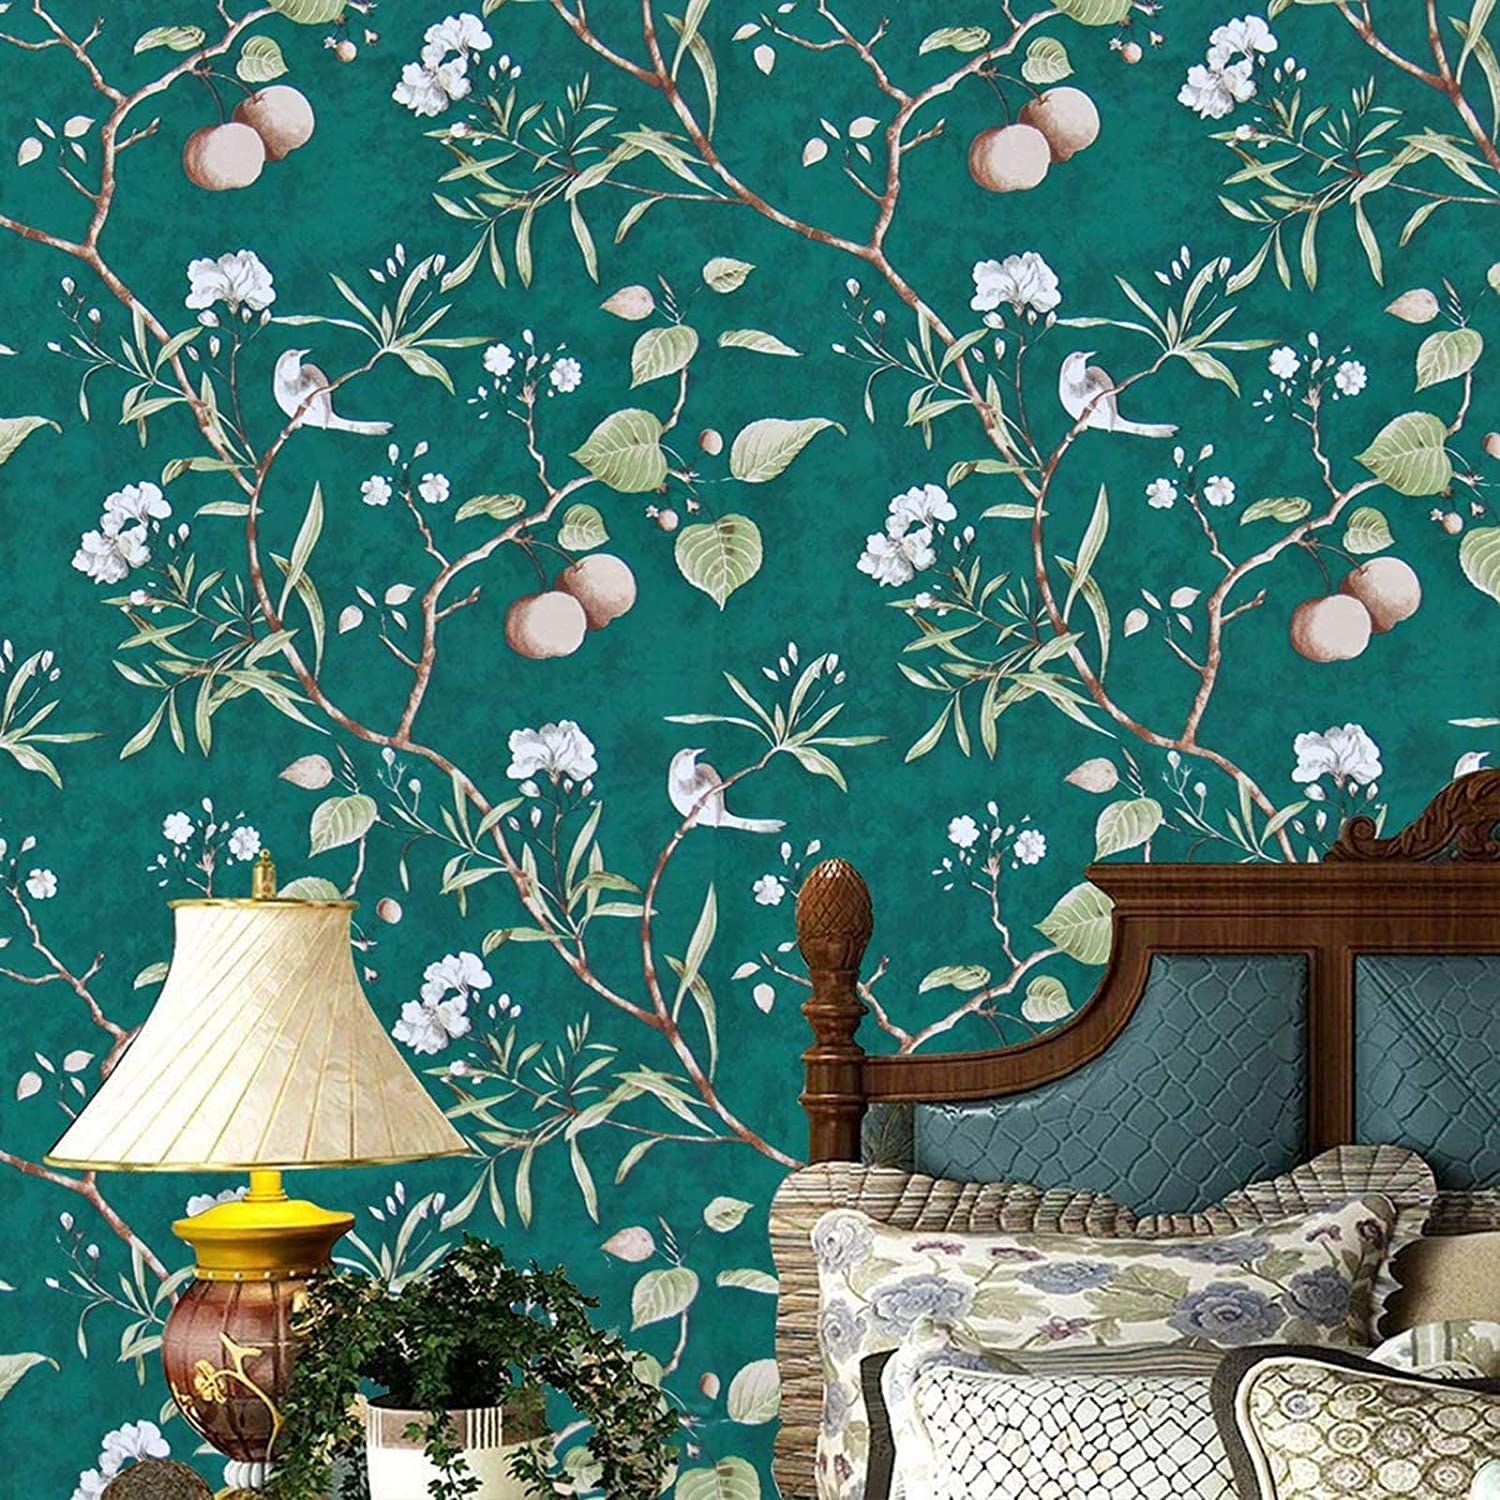 The wallpaper in a bedroom